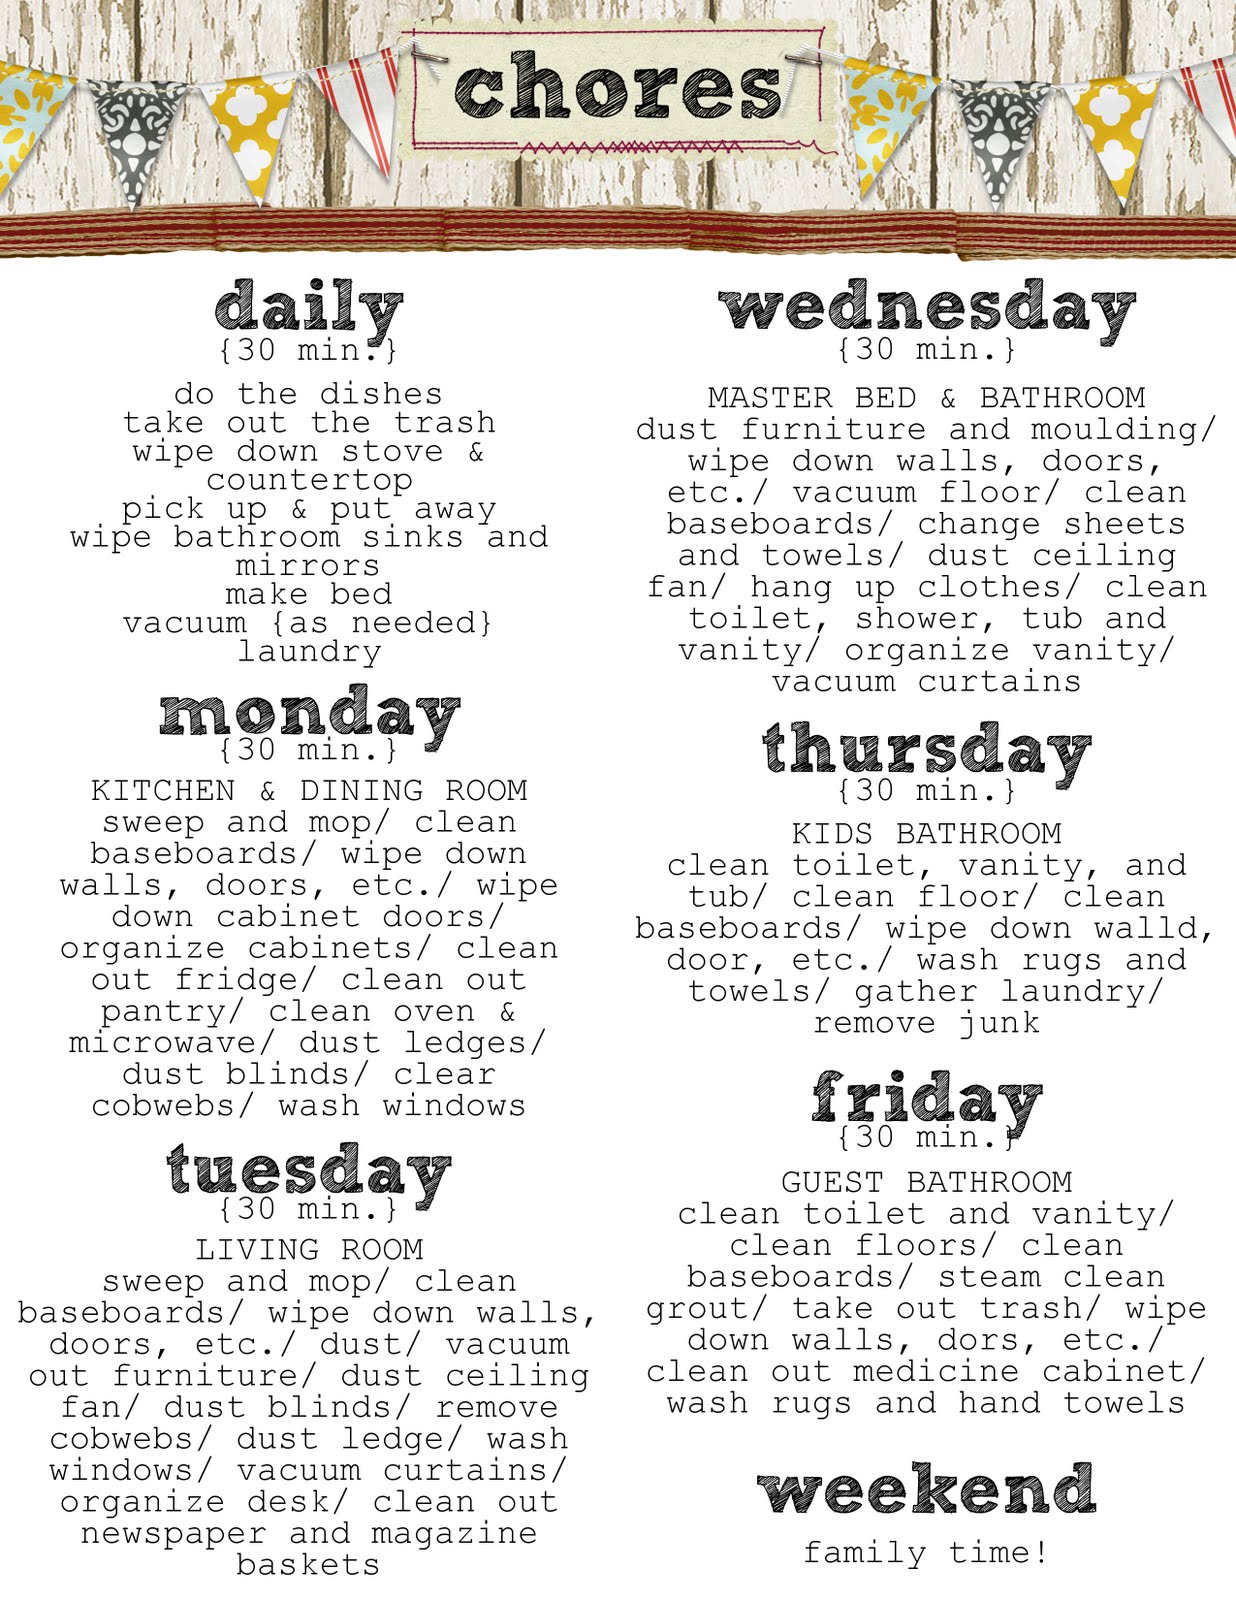 Daily Chores Checklist